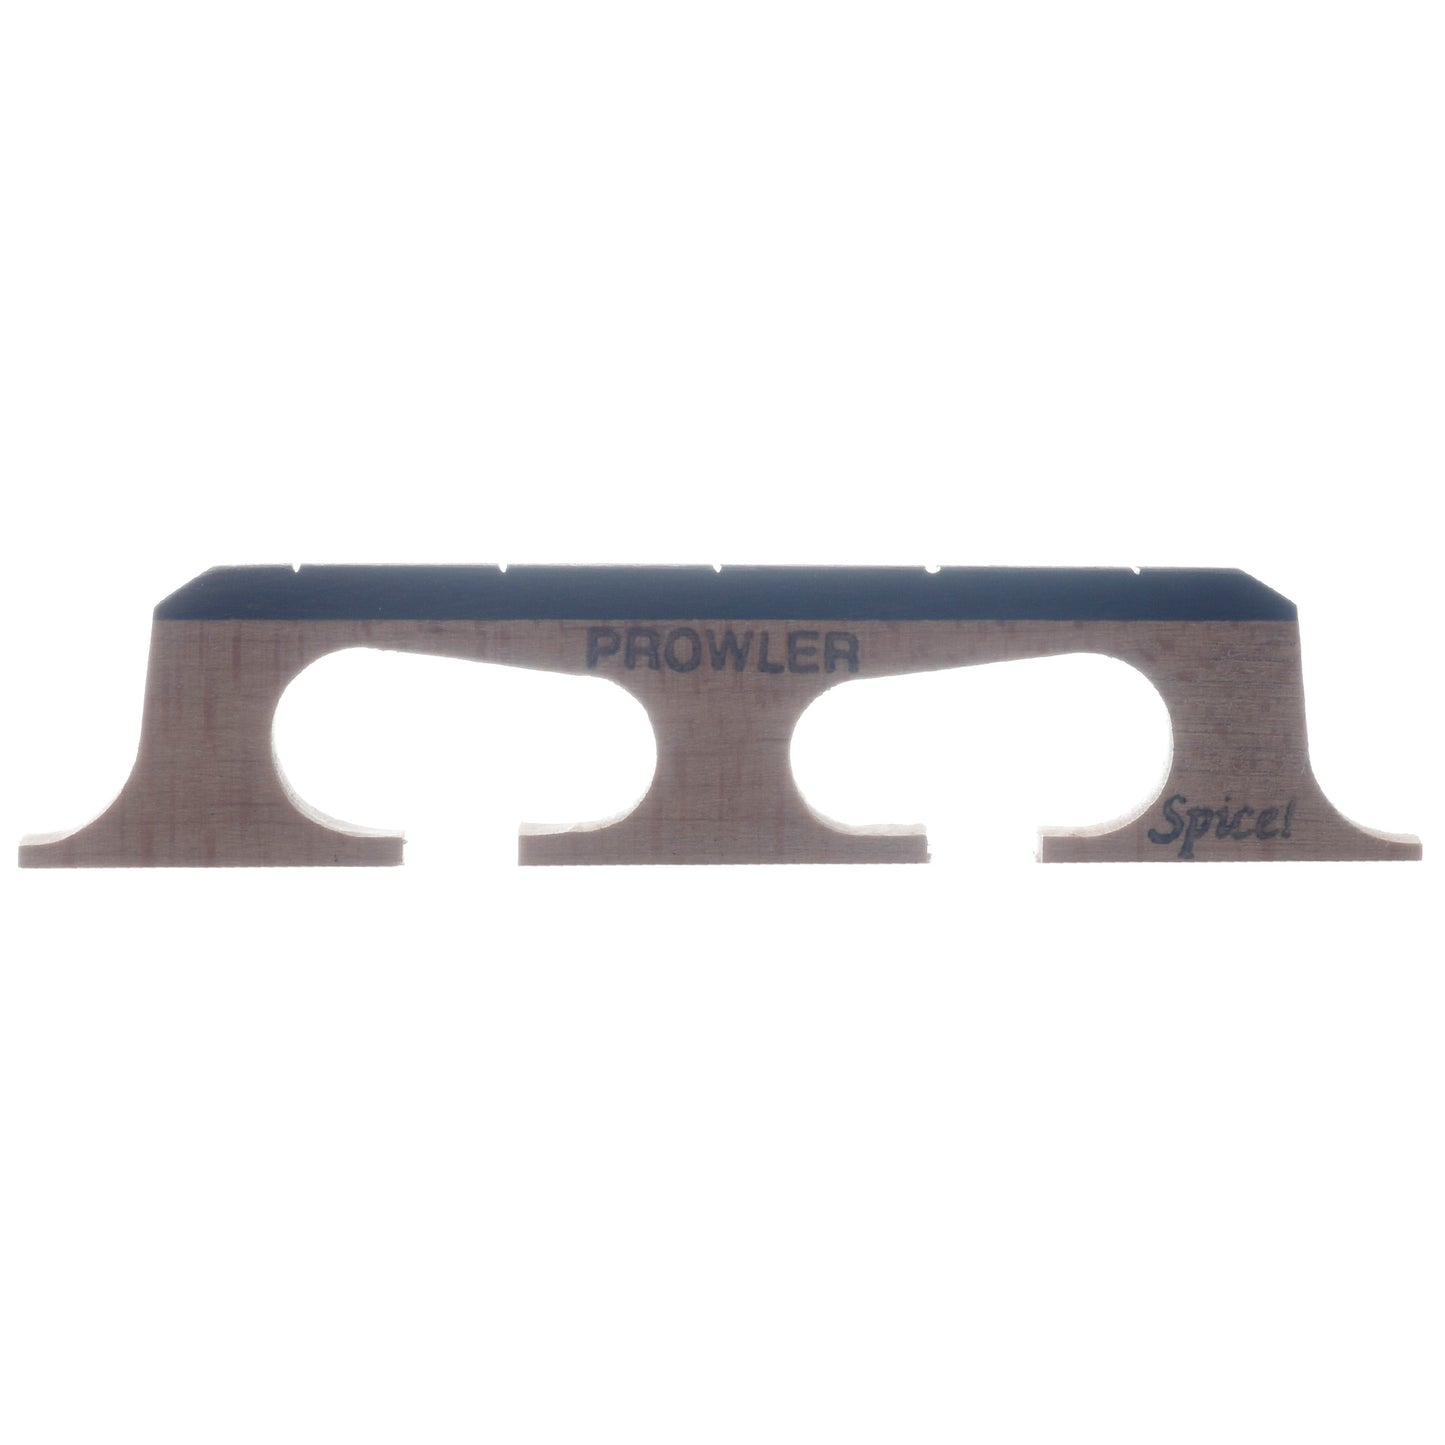 Image 2 of Kat Eyz Prowler Spice Banjo Bridge, 5/8" High, Crowe Spacing - SKU# KEPB-5/8-C : Product Type Accessories & Parts : Elderly Instruments